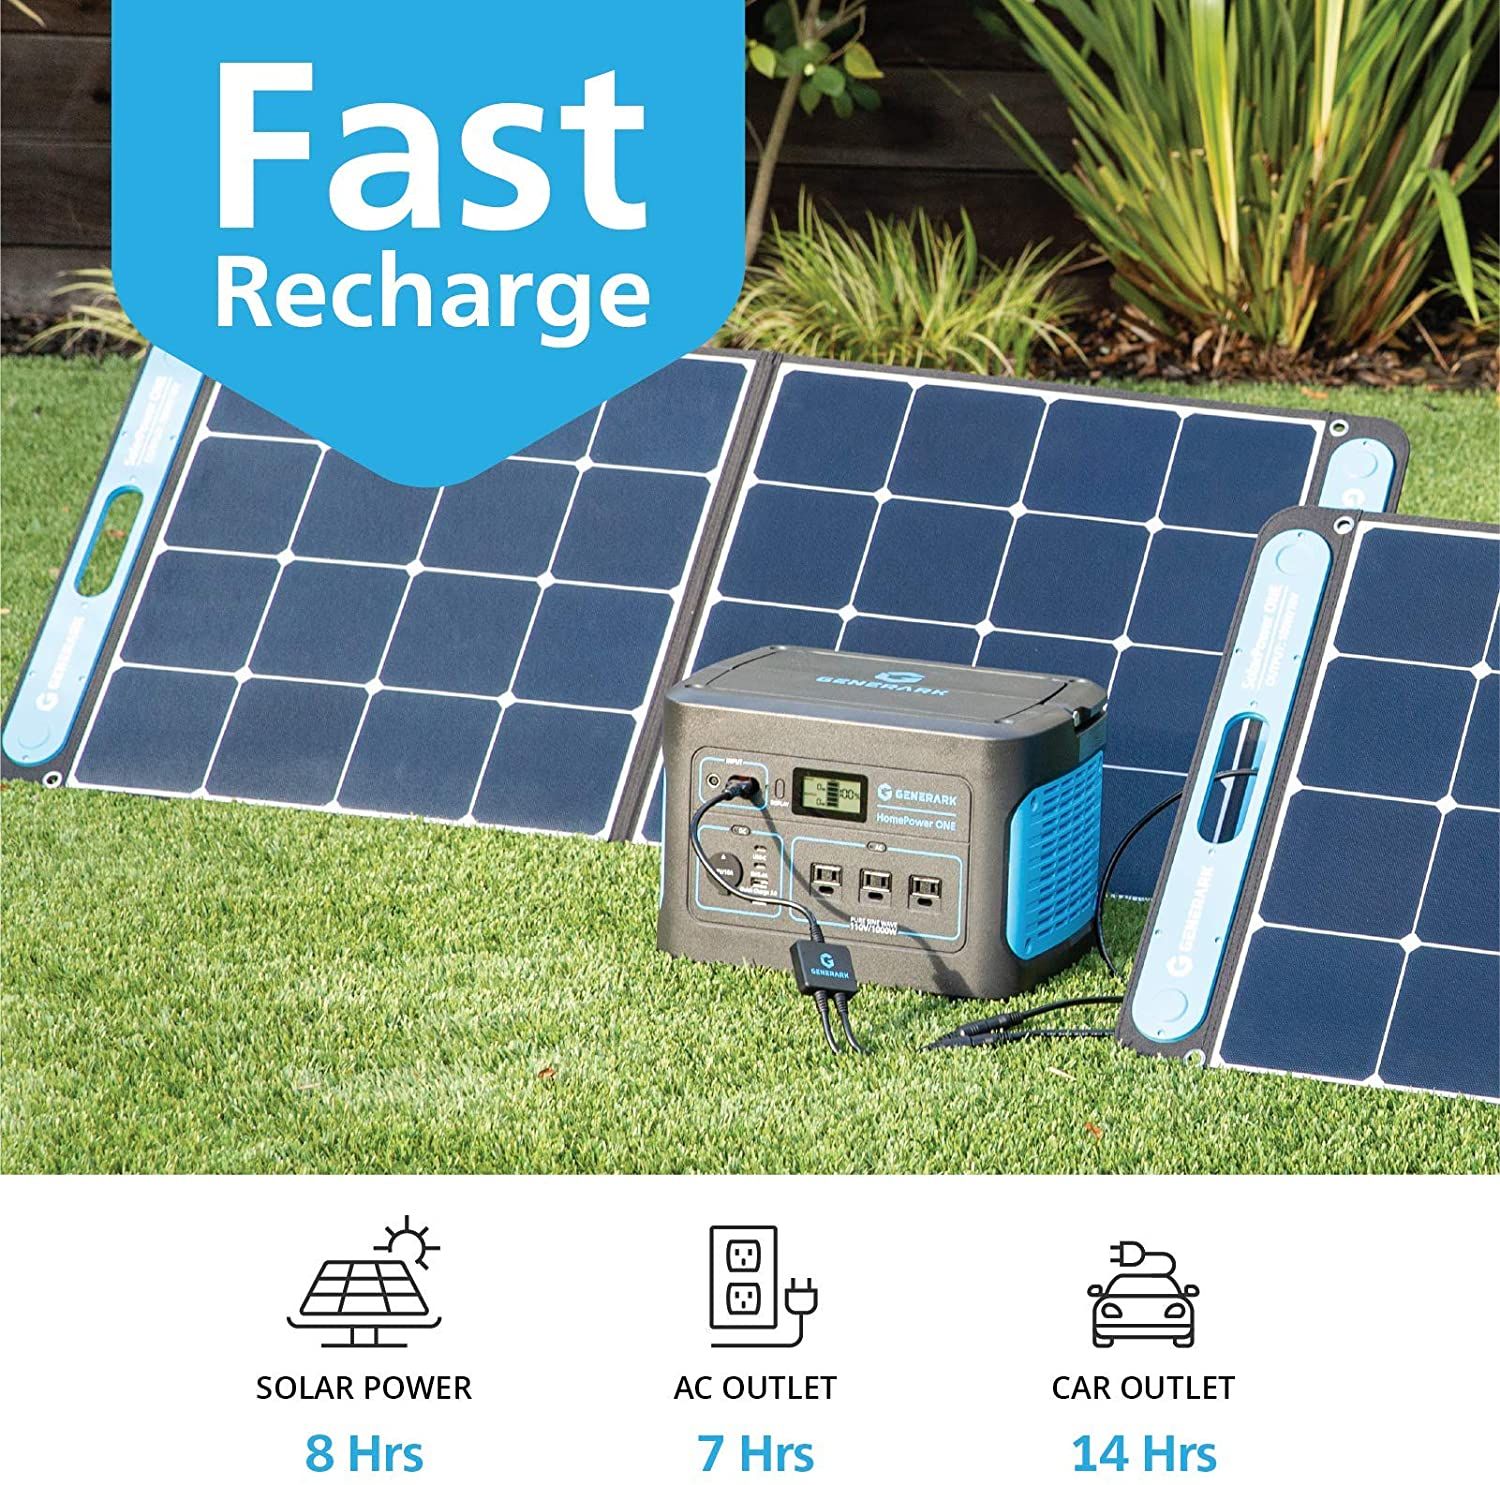 Generark Solar Generator's fast recharging feature